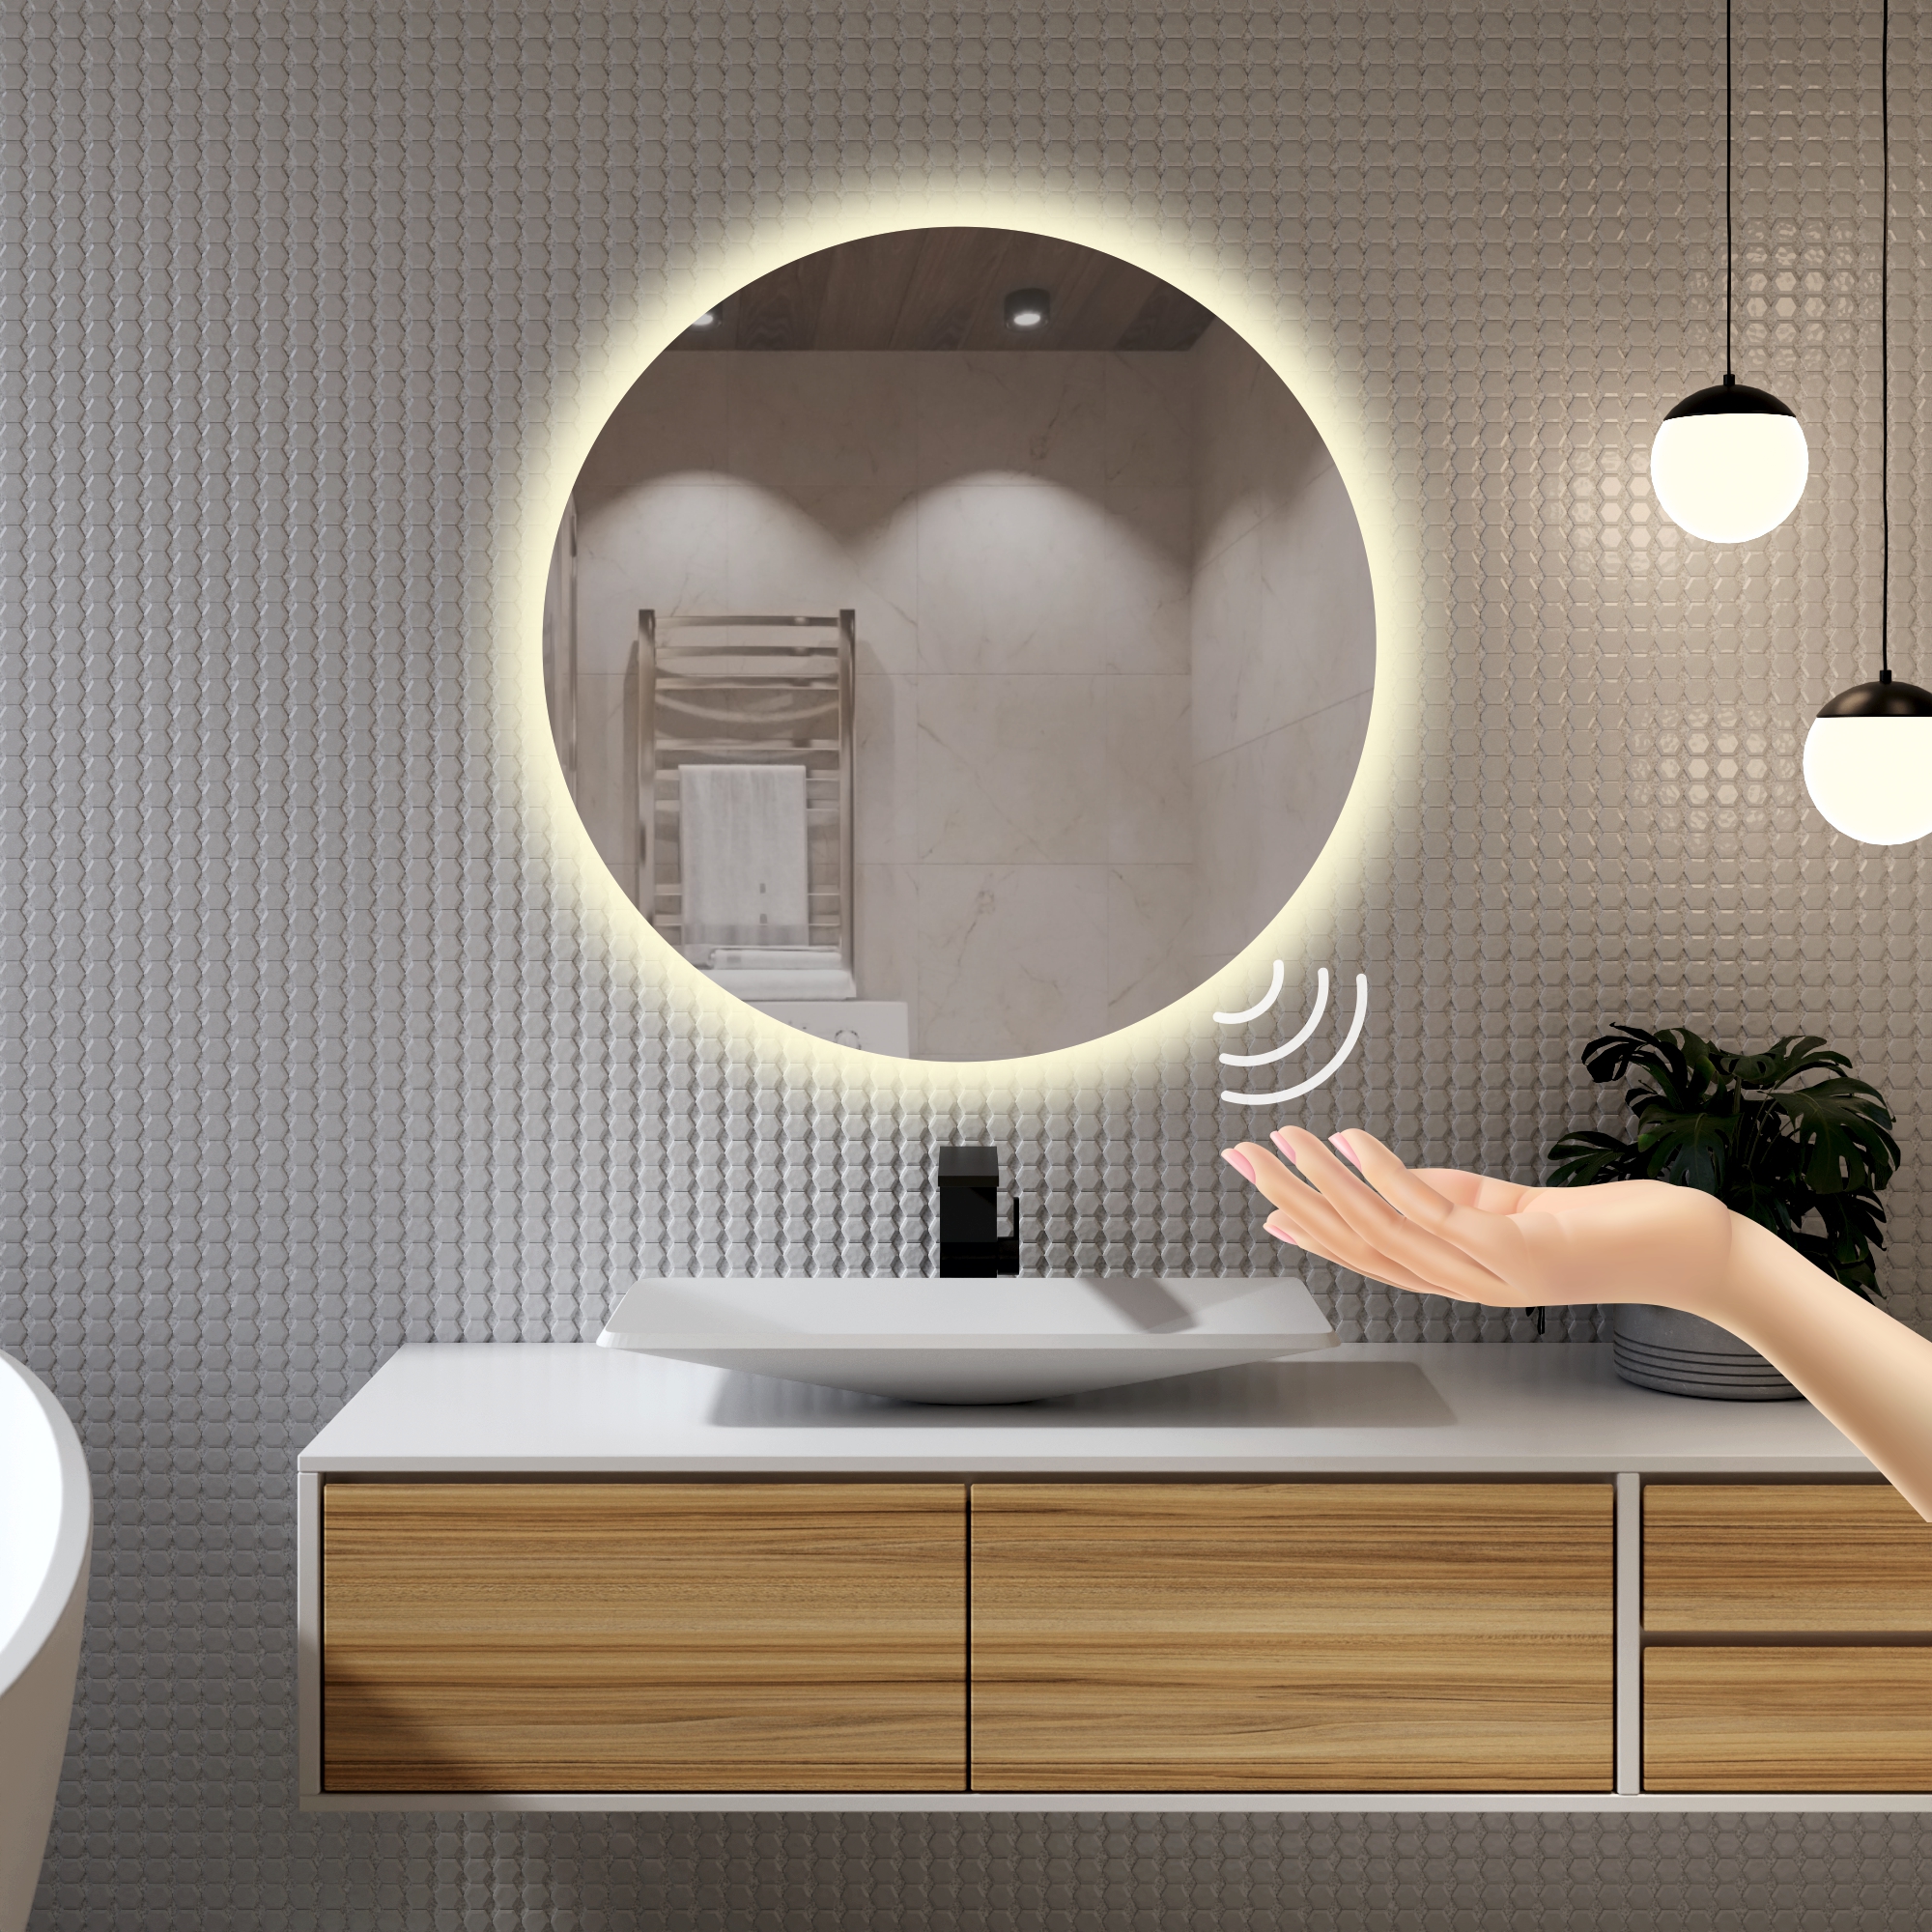 Зеркало для ванной Alfa Mirrors с дневной подсветкой 4200К круглое 70см, арт. Na-7Vzd зеркало с подсветкой настенное круглое silver mirrors fantom 77 см с bluetooth